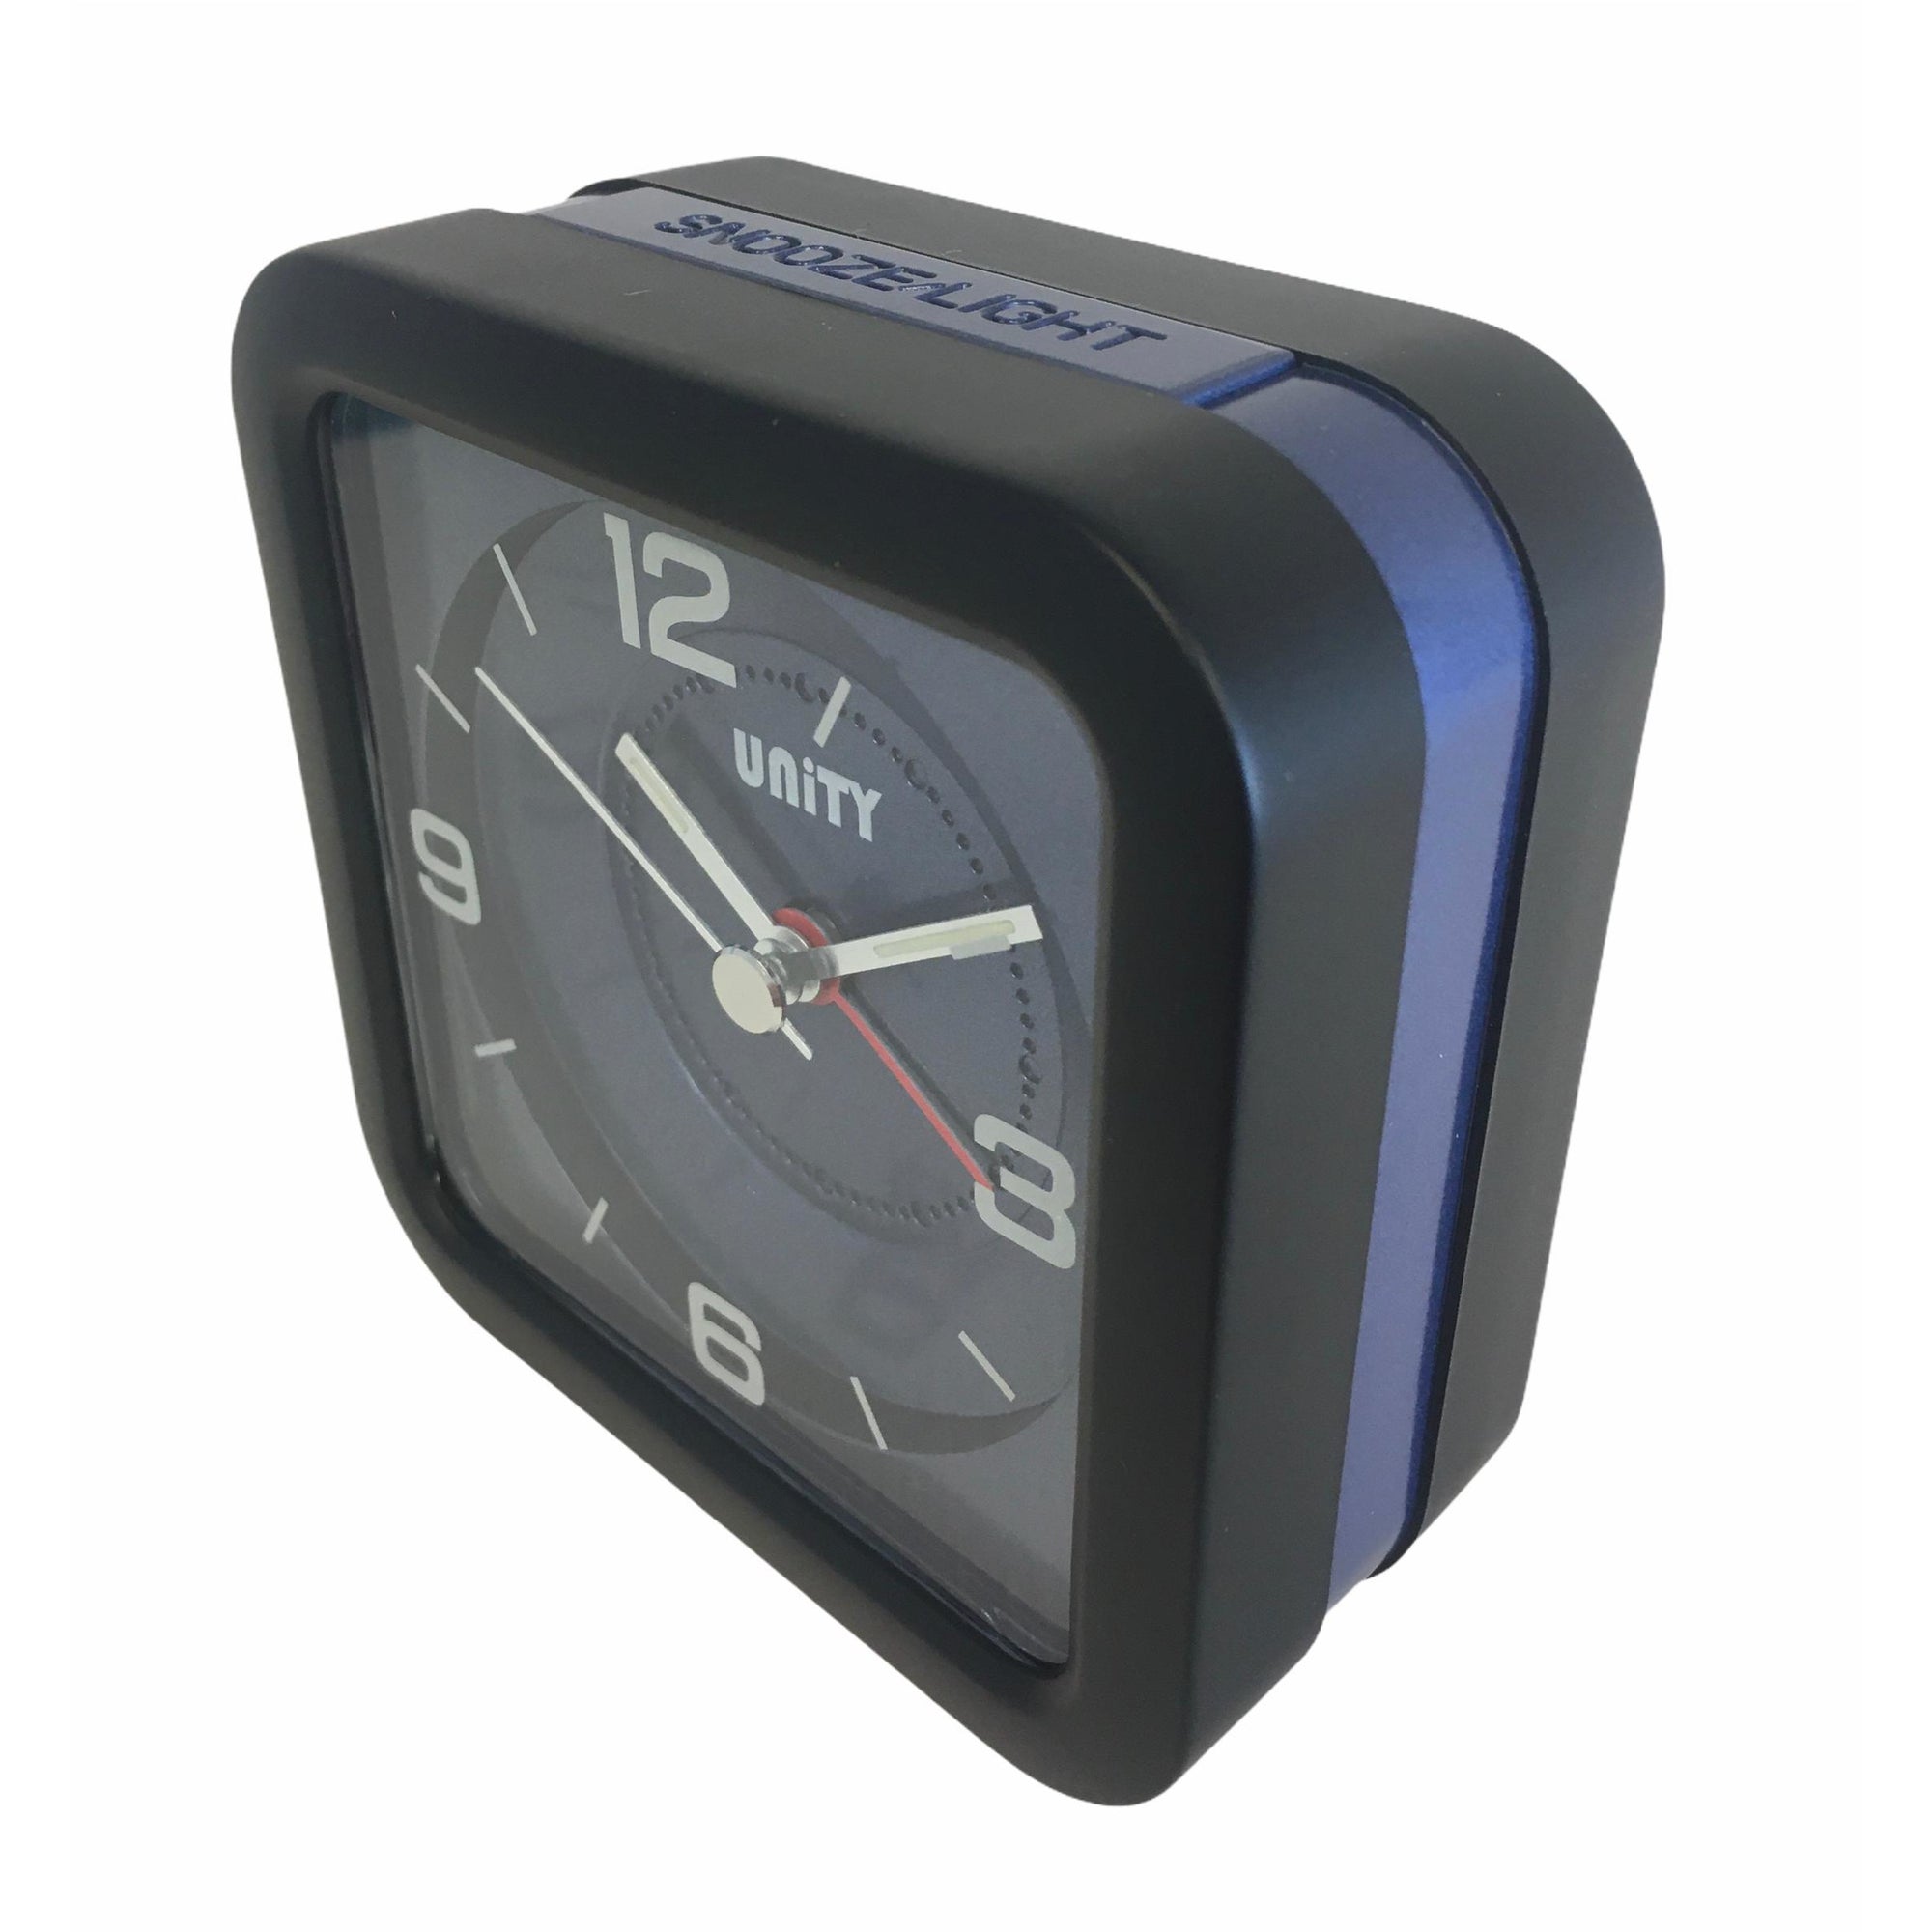 Square Beep Alarm Clock in Blue and Black